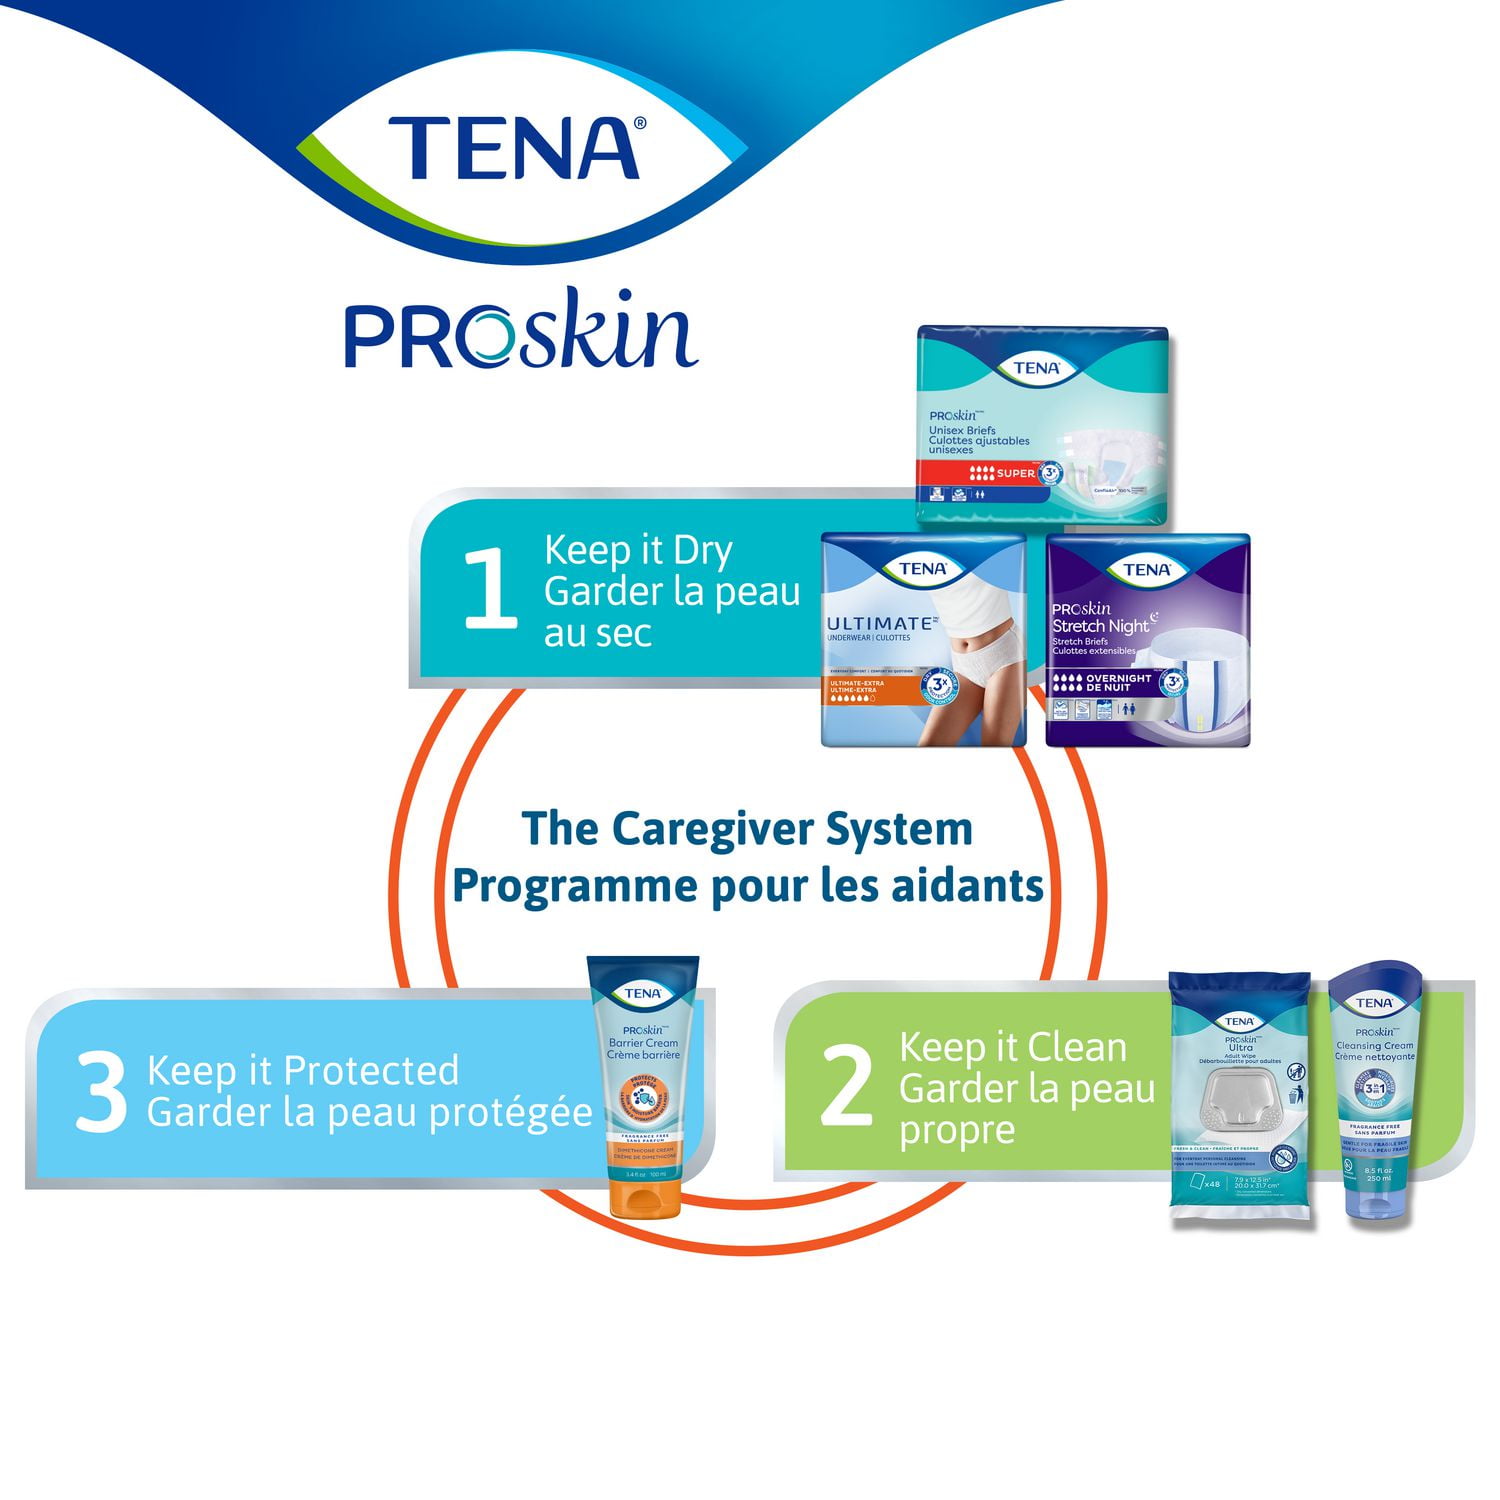 TENA PROskin Unisex Incontinence Briefs, Medium, 24 Count, 24 count 